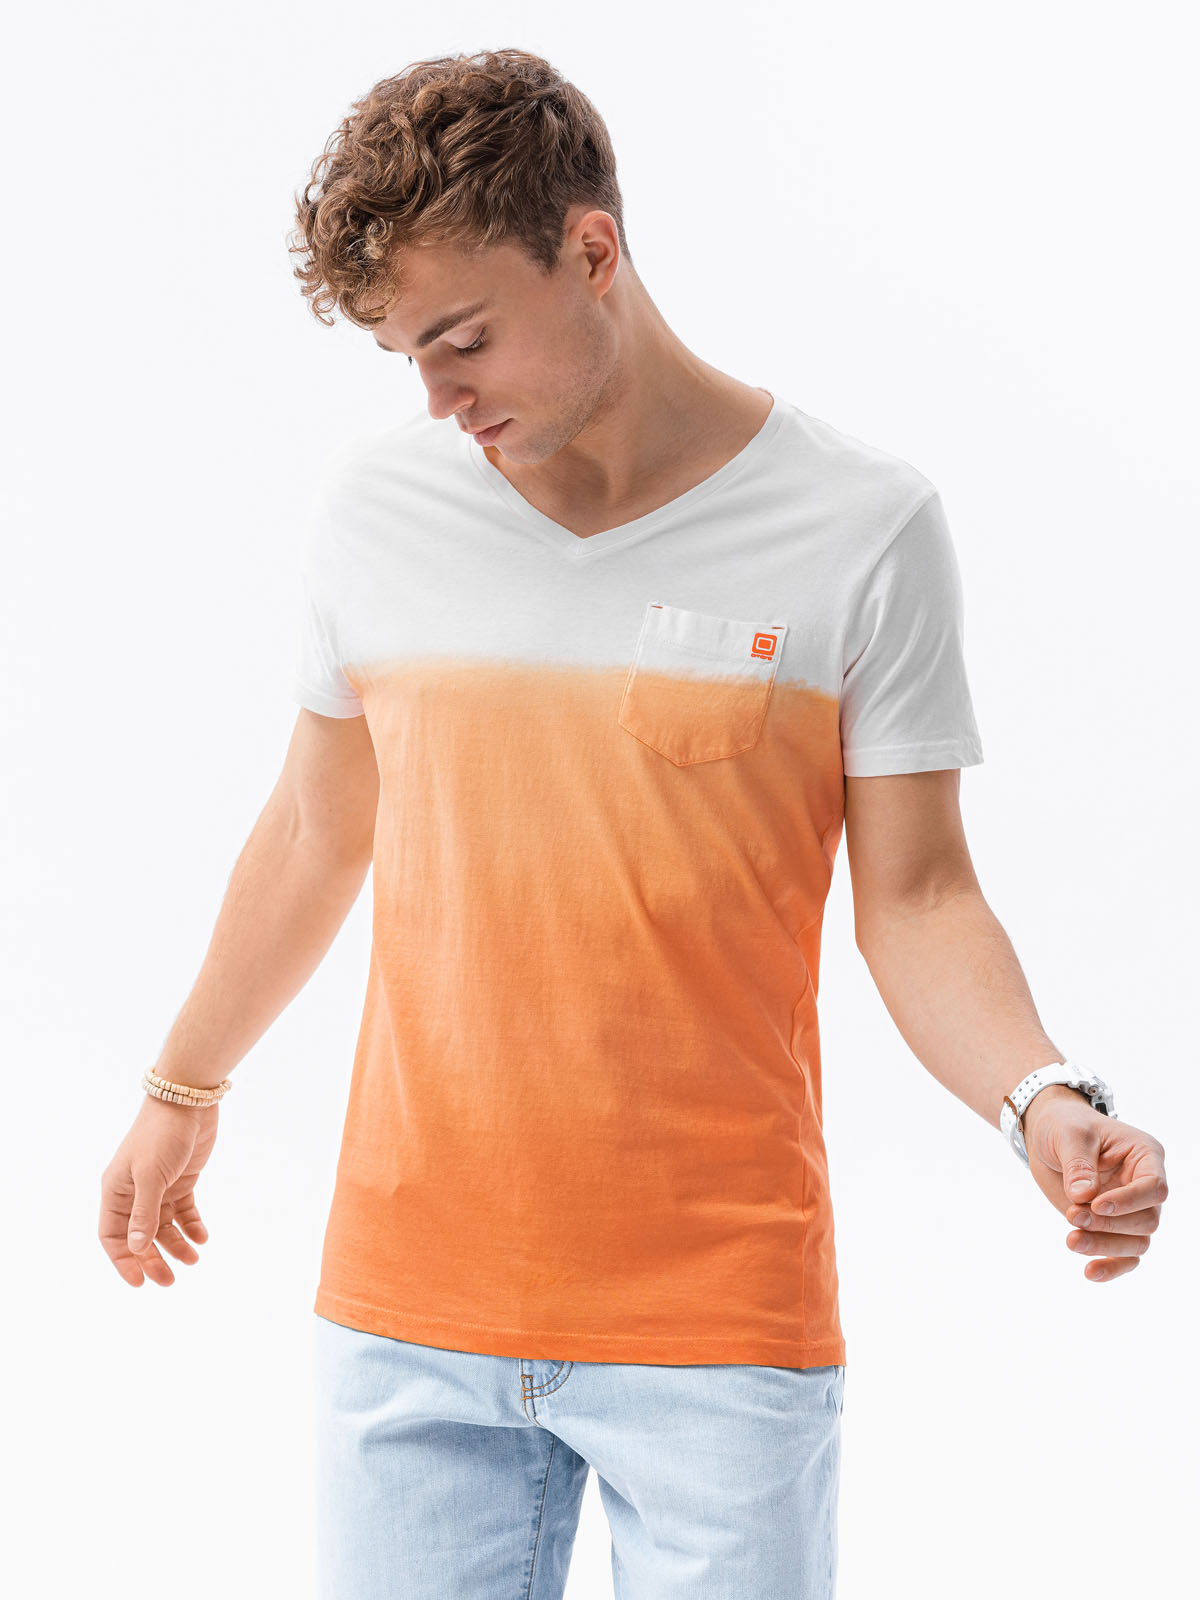 Preloved Men's T-Shirt - Orange - M